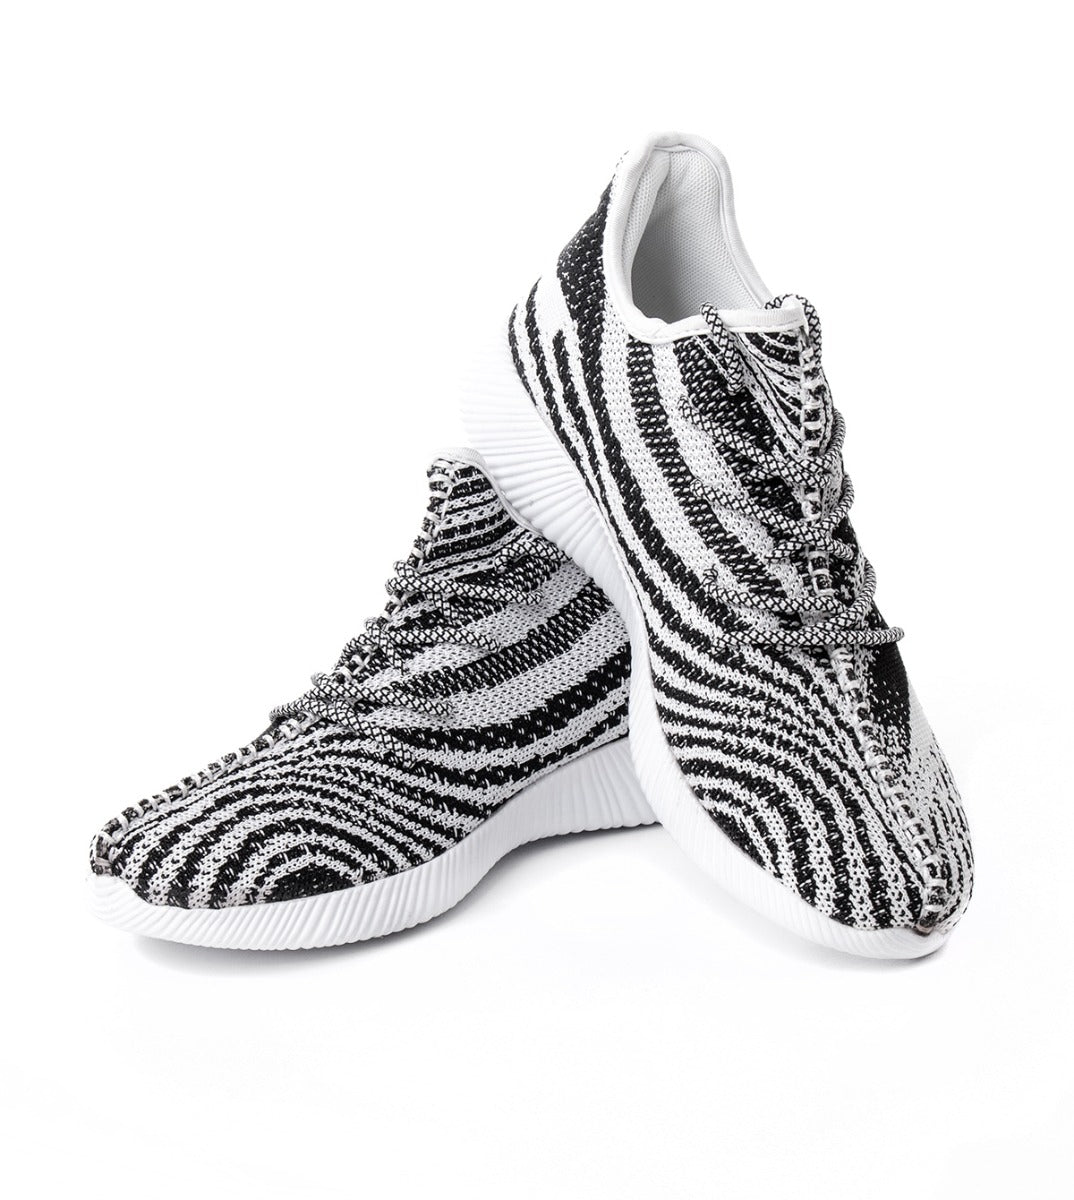 Scarpe Uomo Shoes Sneakers Sportiva Casual Bianca GIOSAL-S1105A